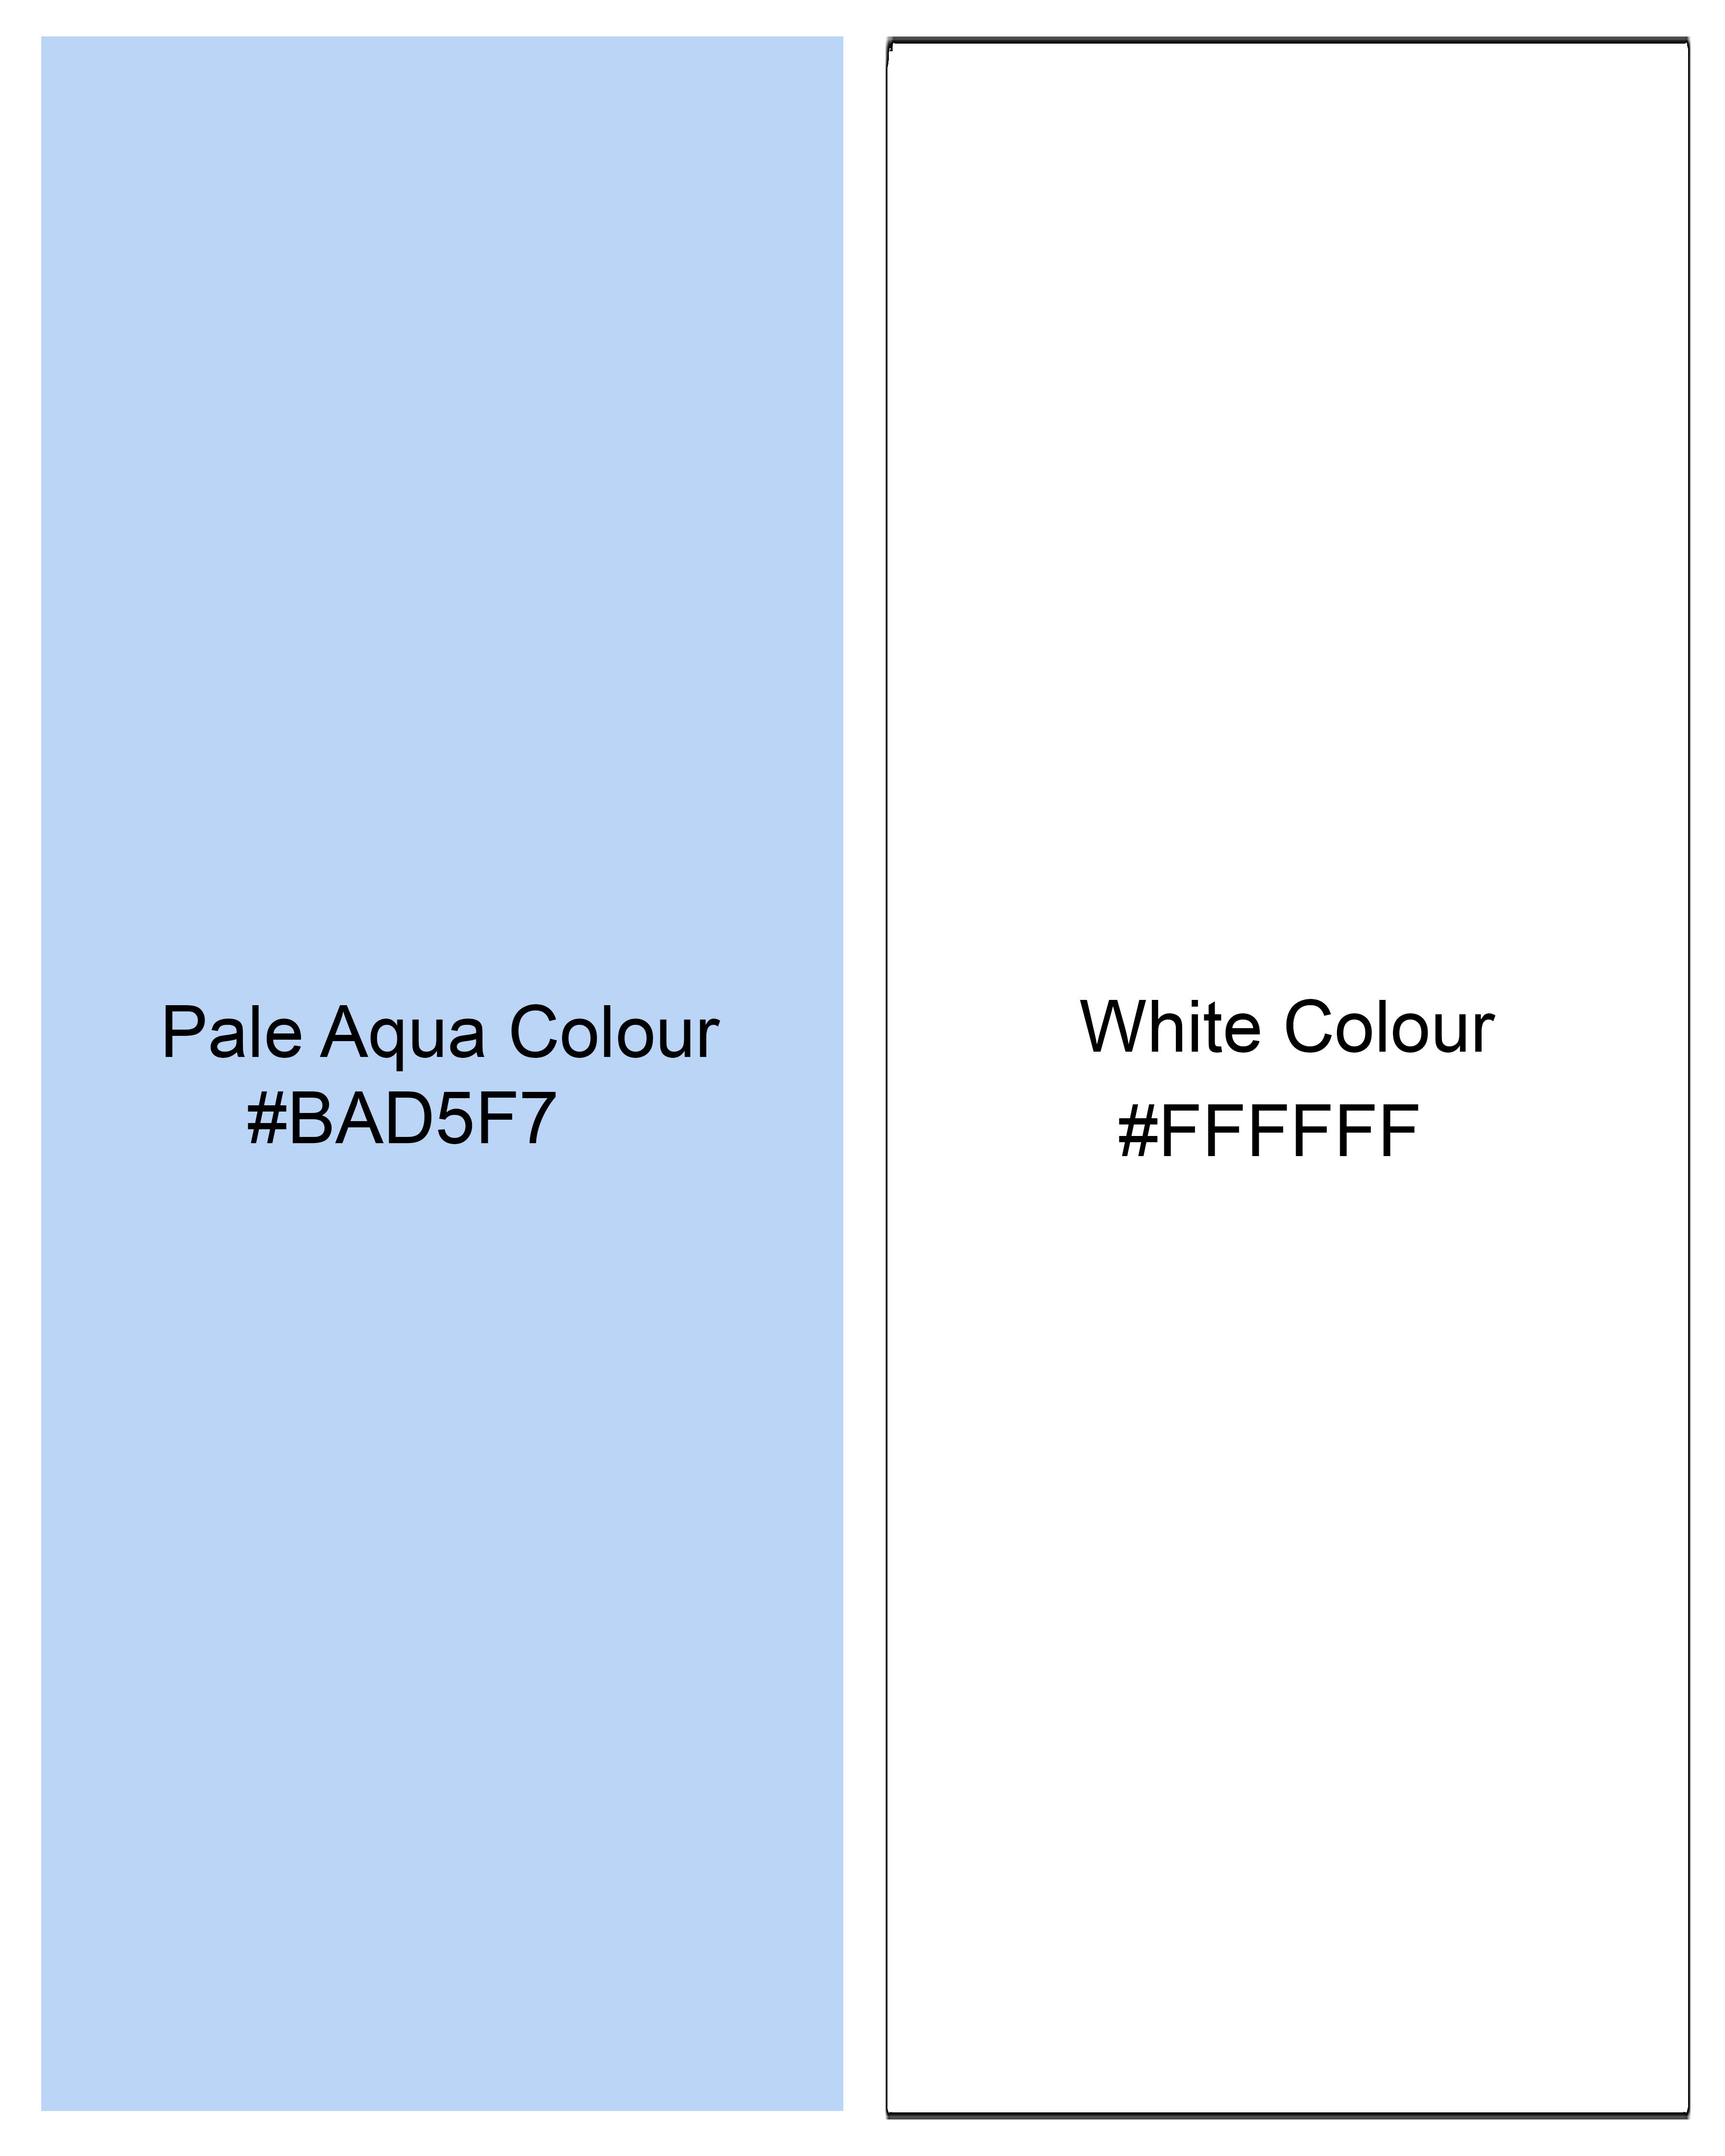 Pale Aqua Blue and White Striped Premium Tencel Shirt  8599-CC-38,8599-CC-H-38,8599-CC-39,8599-CC-H-39,8599-CC-40,8599-CC-H-40,8599-CC-42,8599-CC-H-42,8599-CC-44,8599-CC-H-44,8599-CC-46,8599-CC-H-46,8599-CC-48,8599-CC-H-48,8599-CC-50,8599-CC-H-50,8599-CC-52,8599-CC-H-52